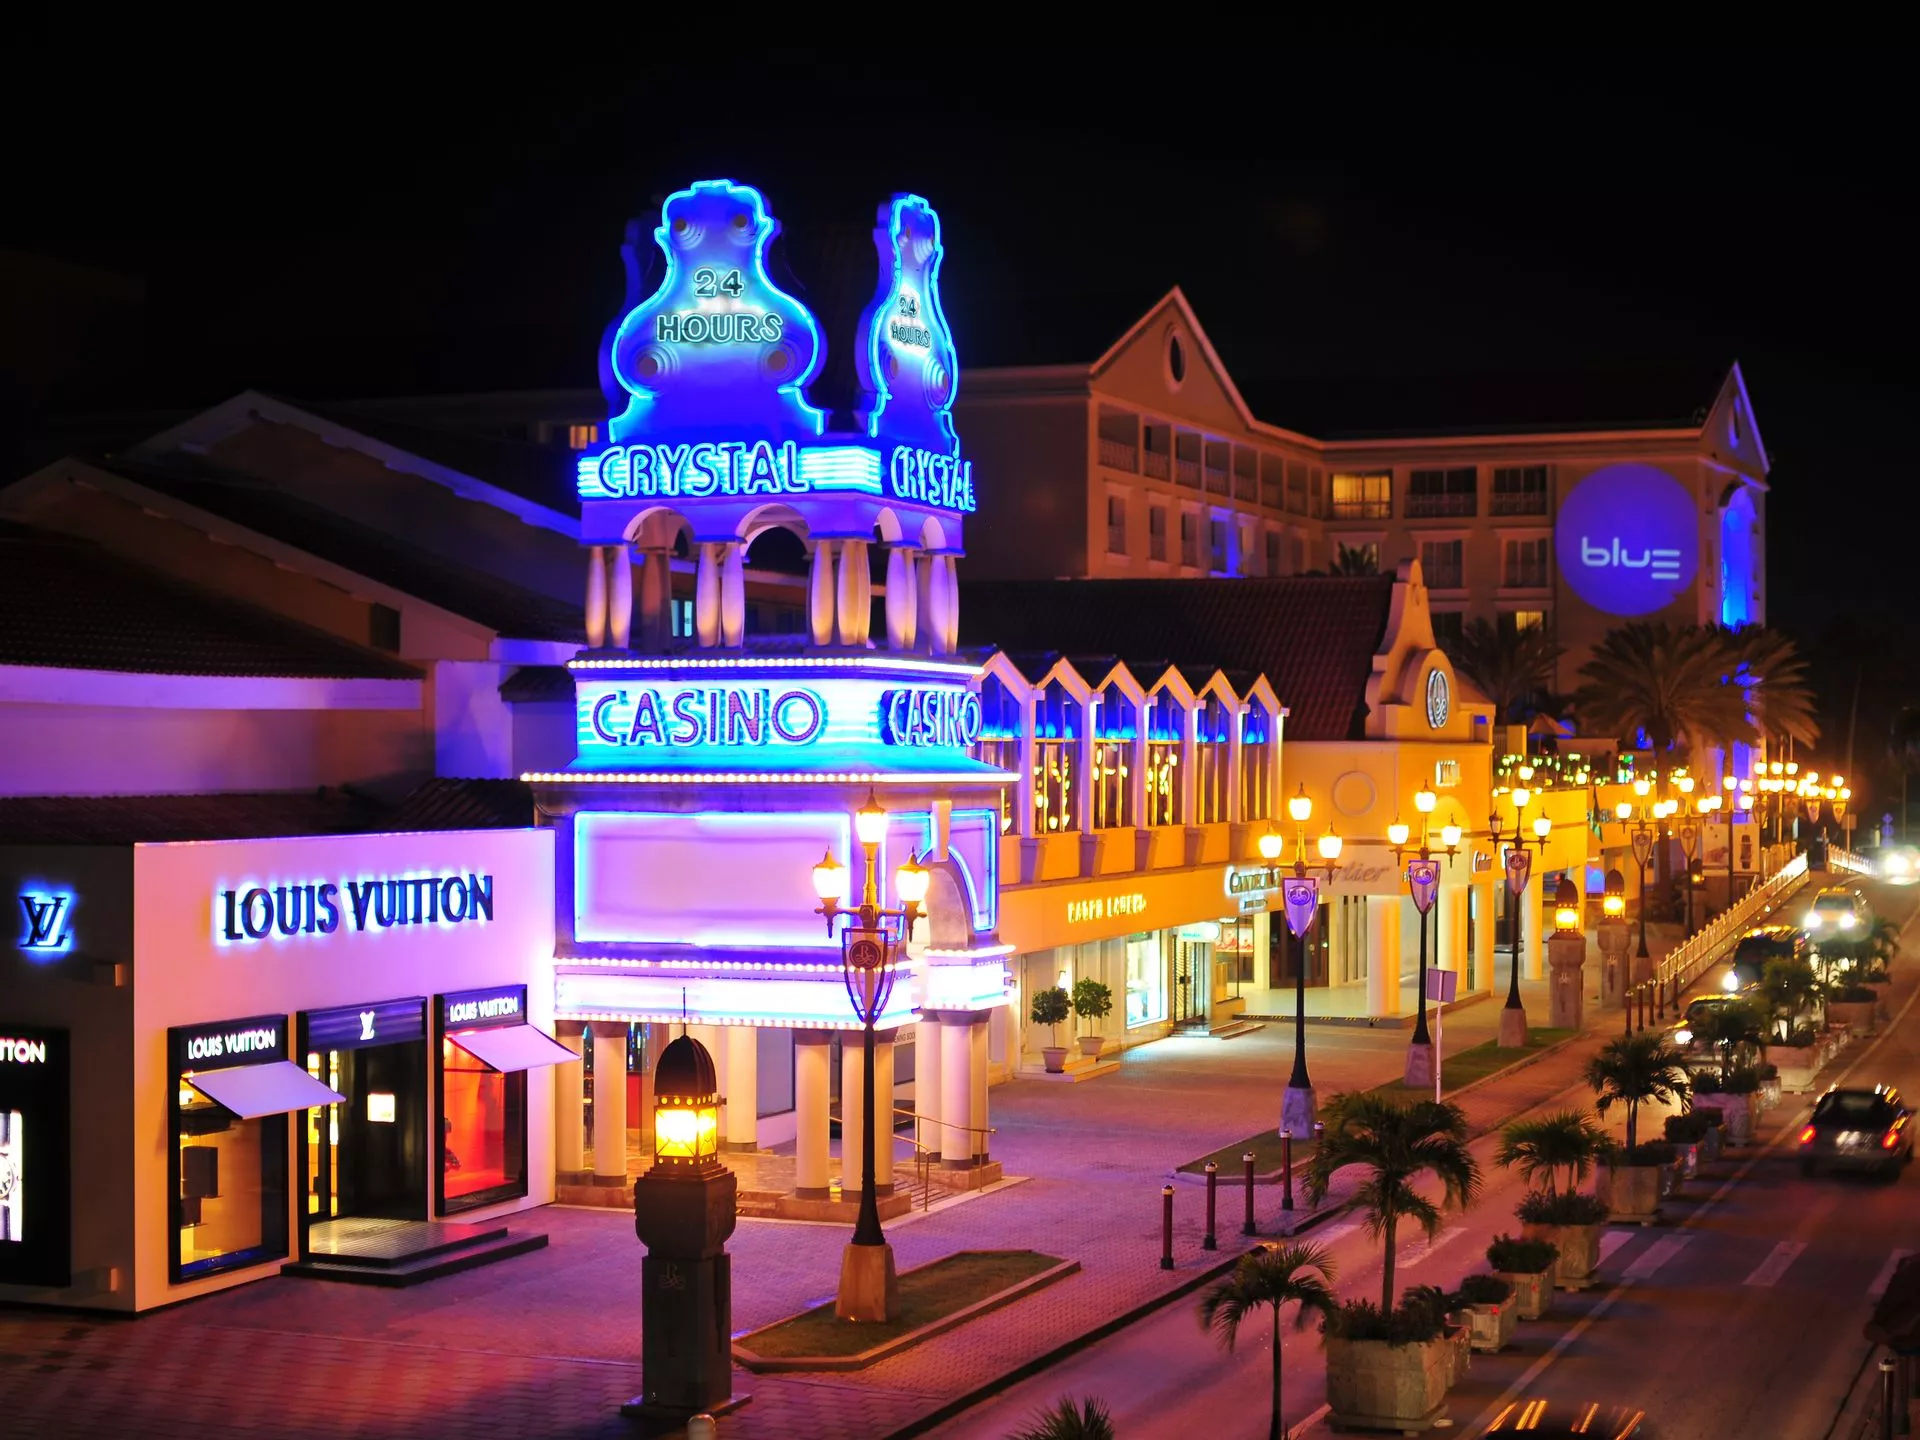 Seaport Casino in Aruba, Caribbean | Casinos - Rated 3.4